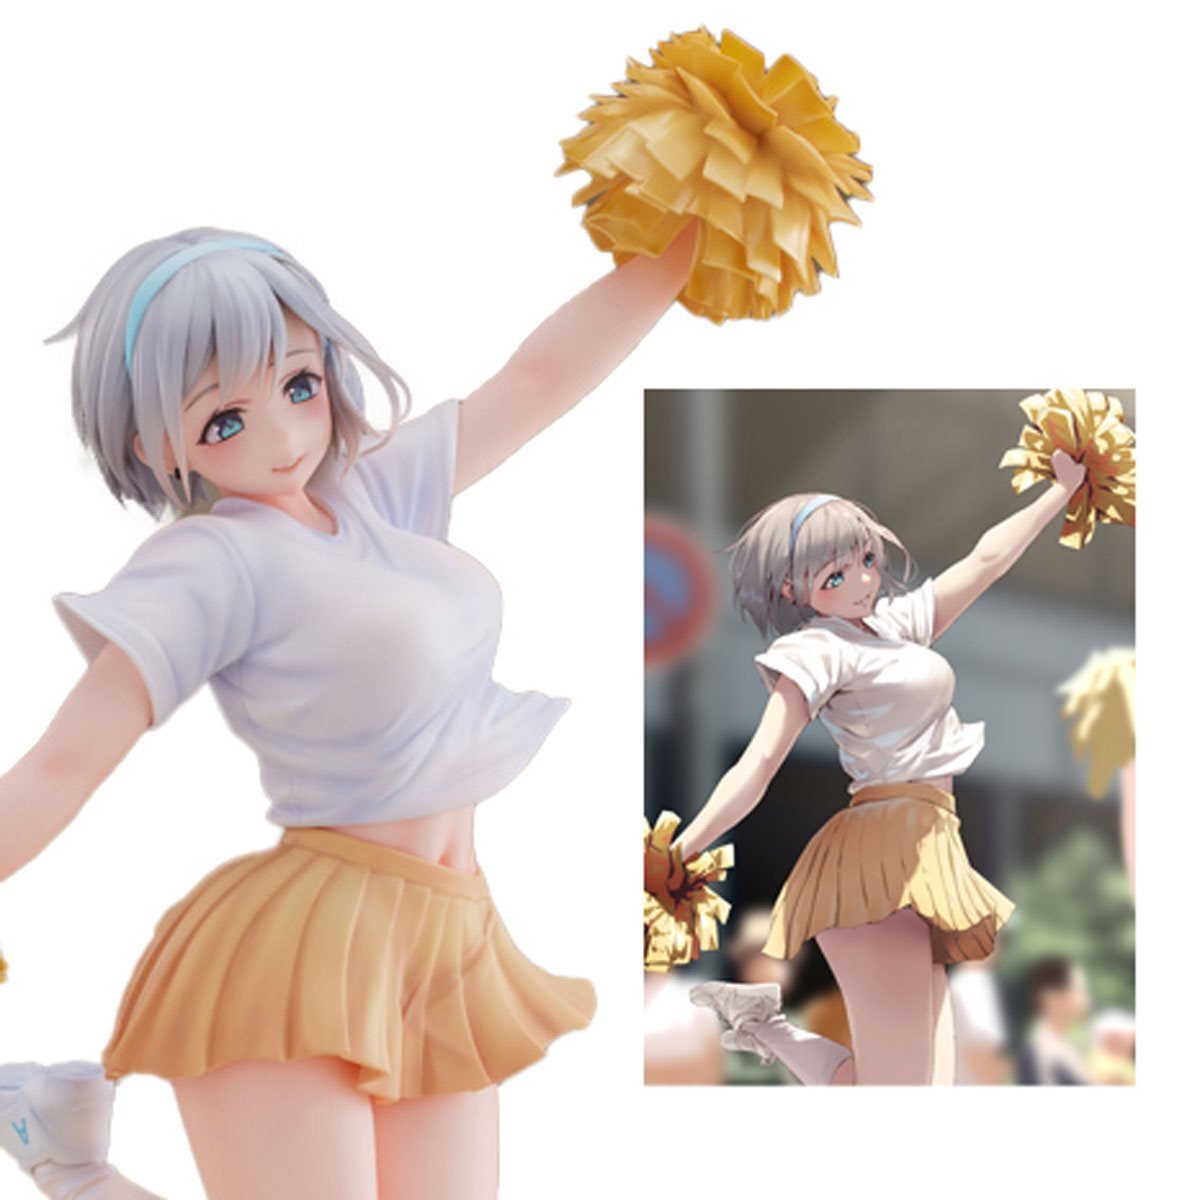 Anime/Manga - Cheerleader Riku 1/6th Scale Figure Hobby Sakura Illustration by Josun Limited Edition